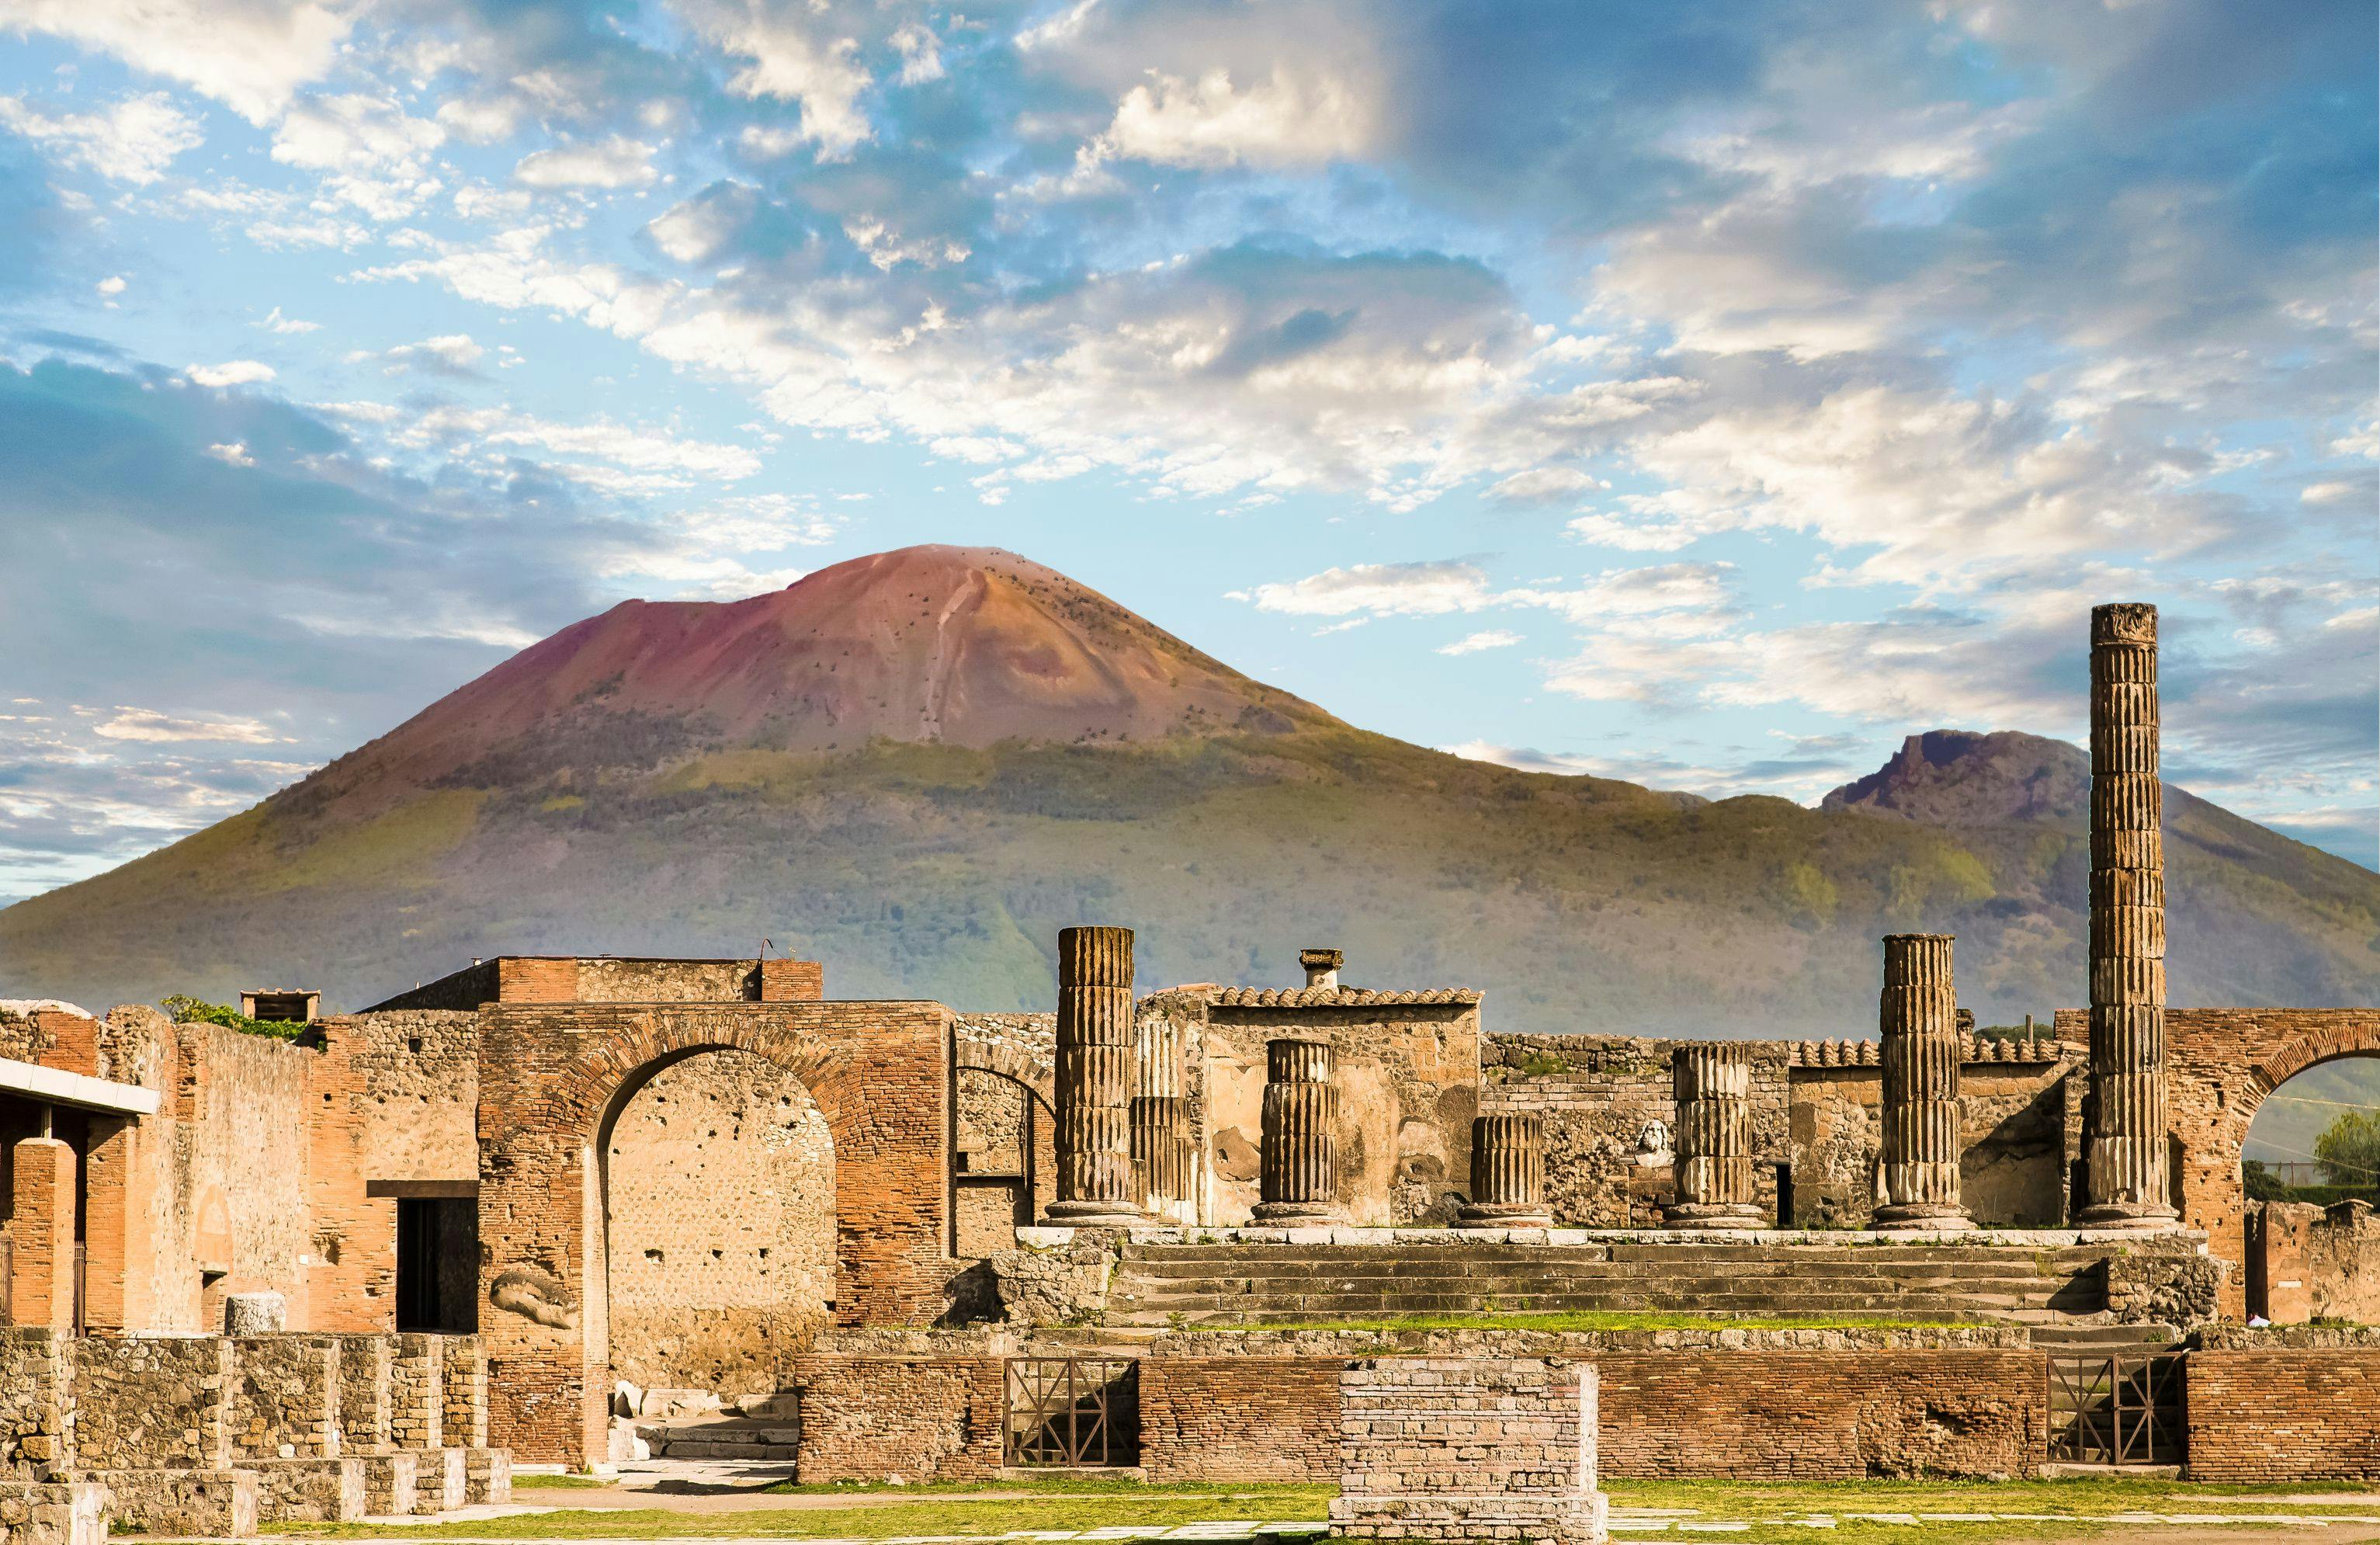 Vesuvius and Pompeii | Image Credit: © dbvirago - stock.adobe.com